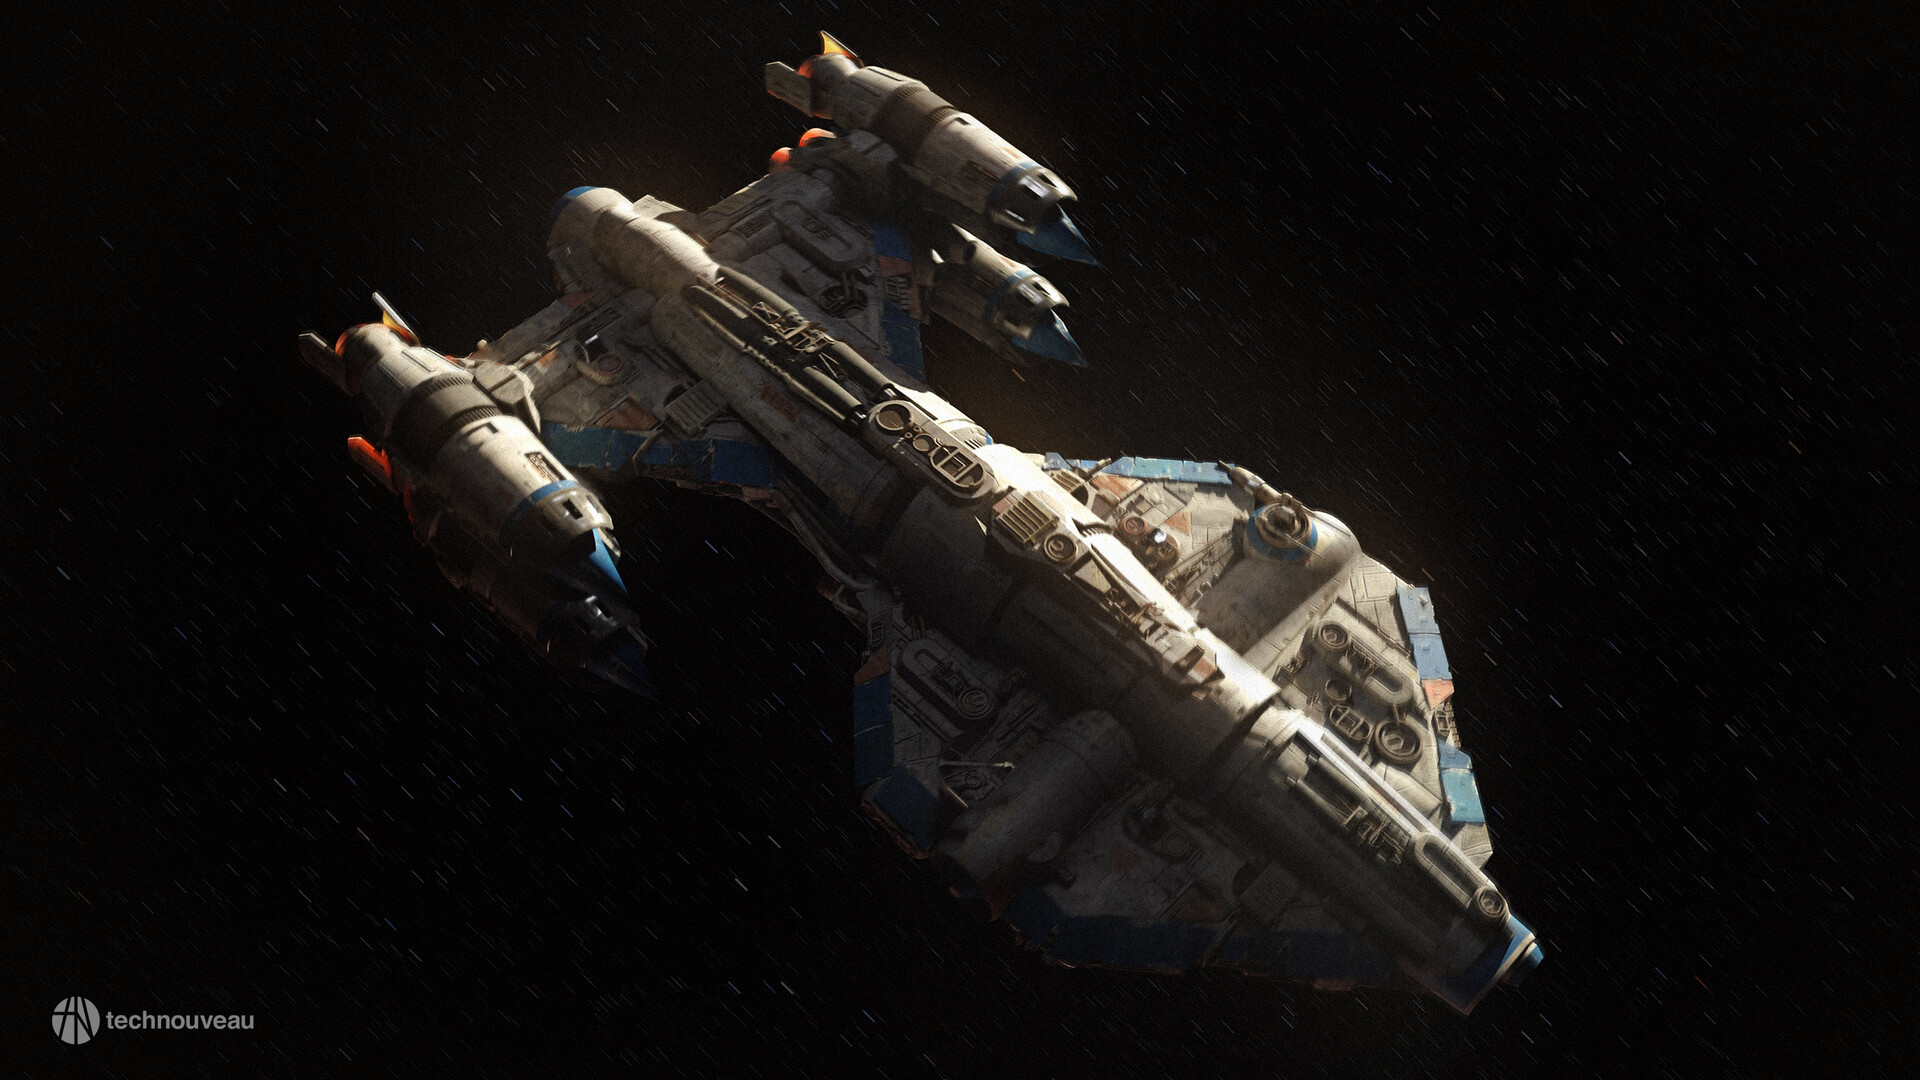 Science Fiction Star Wars Star Wars Ships Vehicle Space CGi Digital Art ArtStation 1920x1080